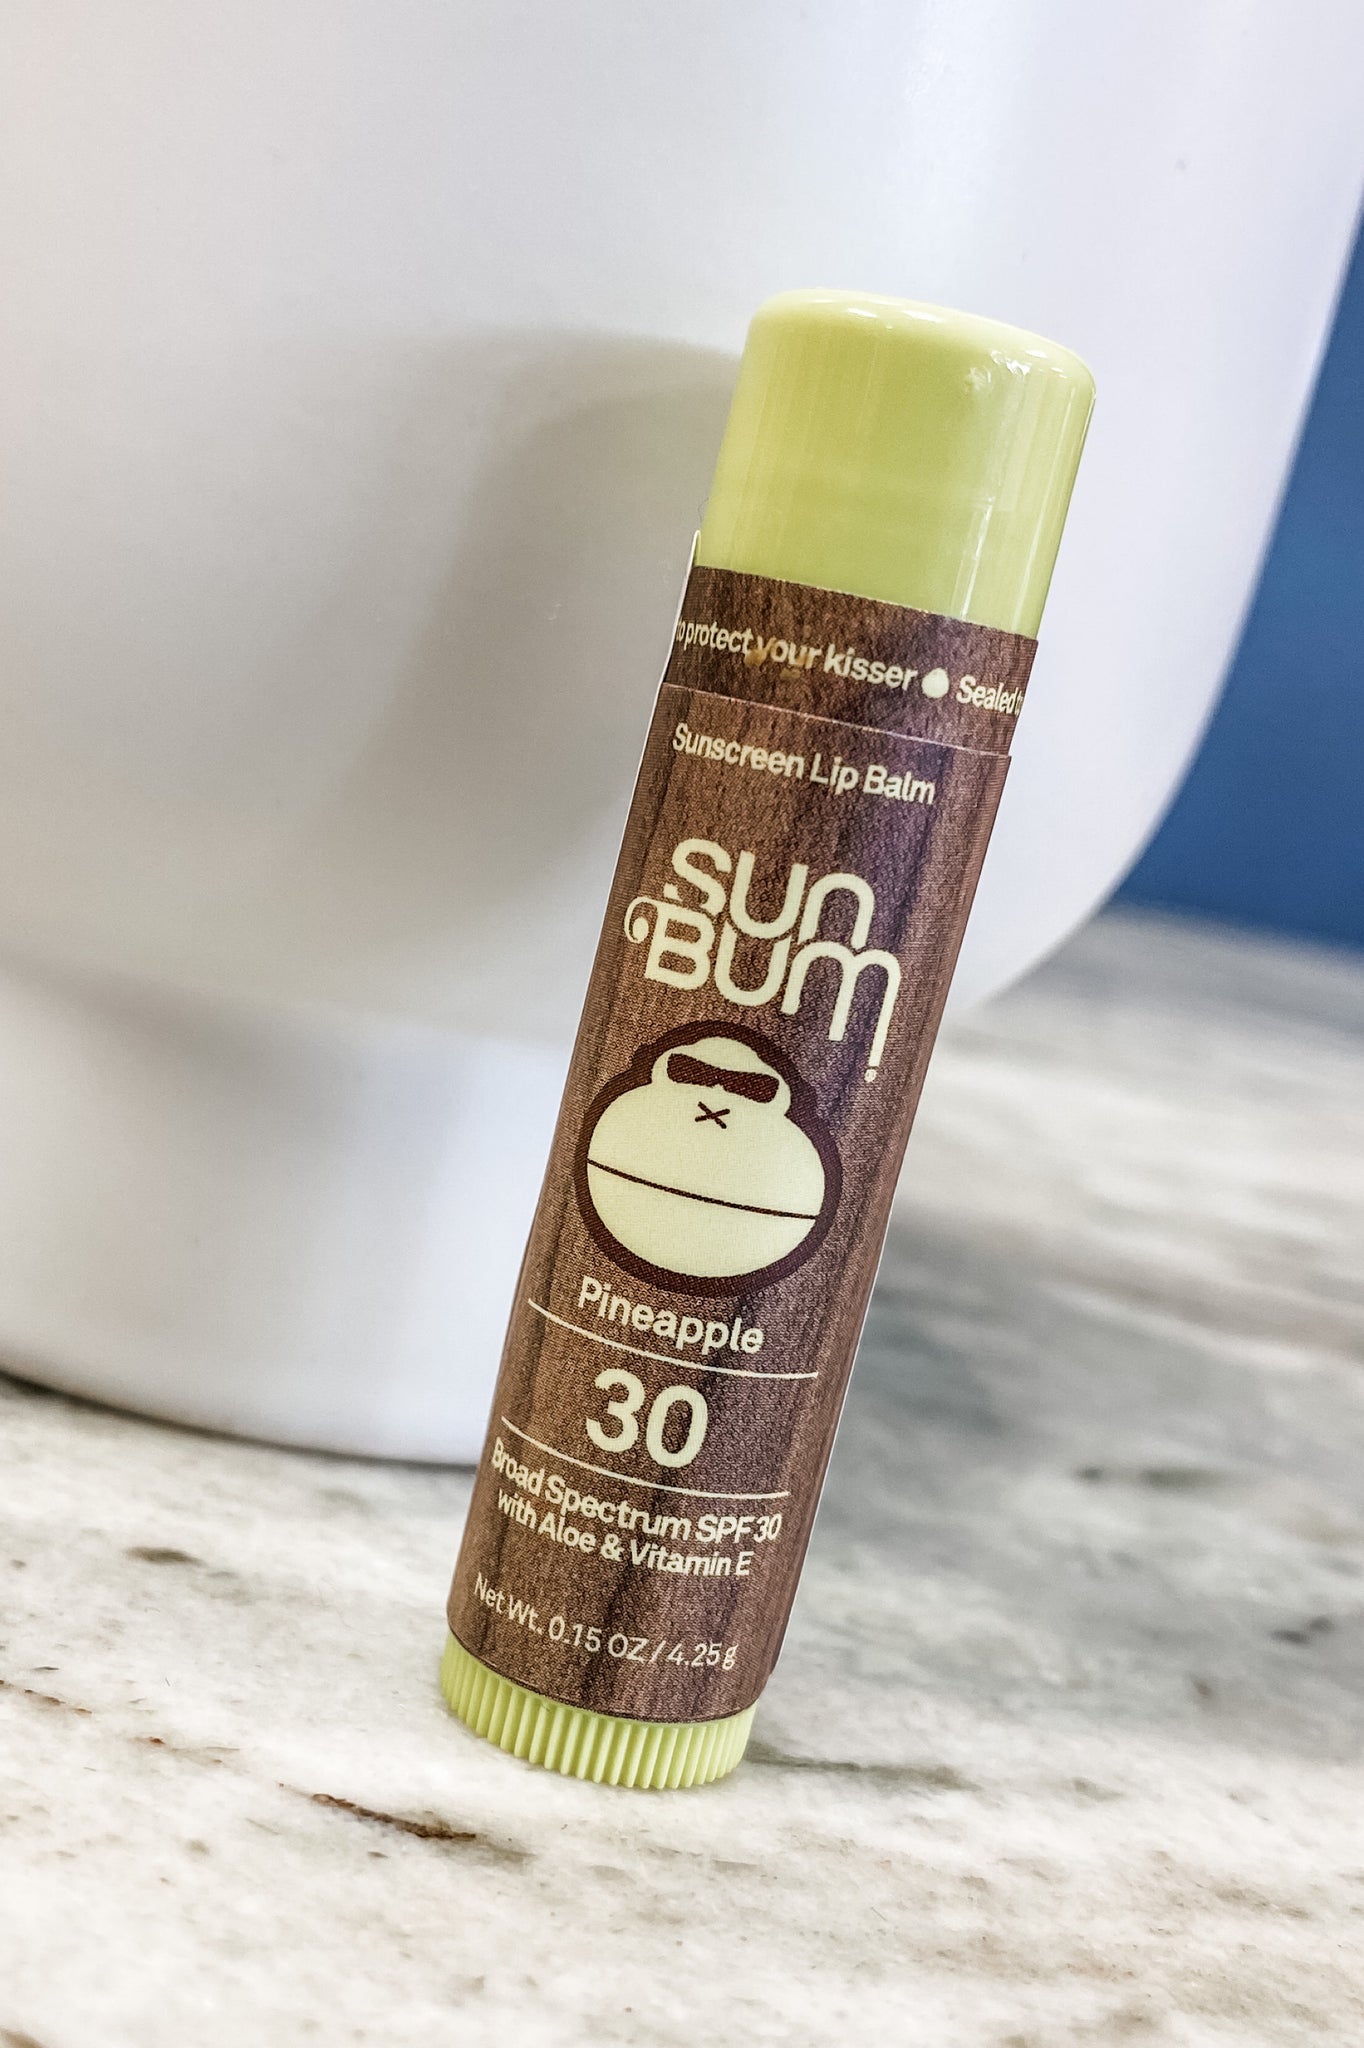 Sun Bum Original SPF 30 Sunscreen Lip Balm - Pineapple